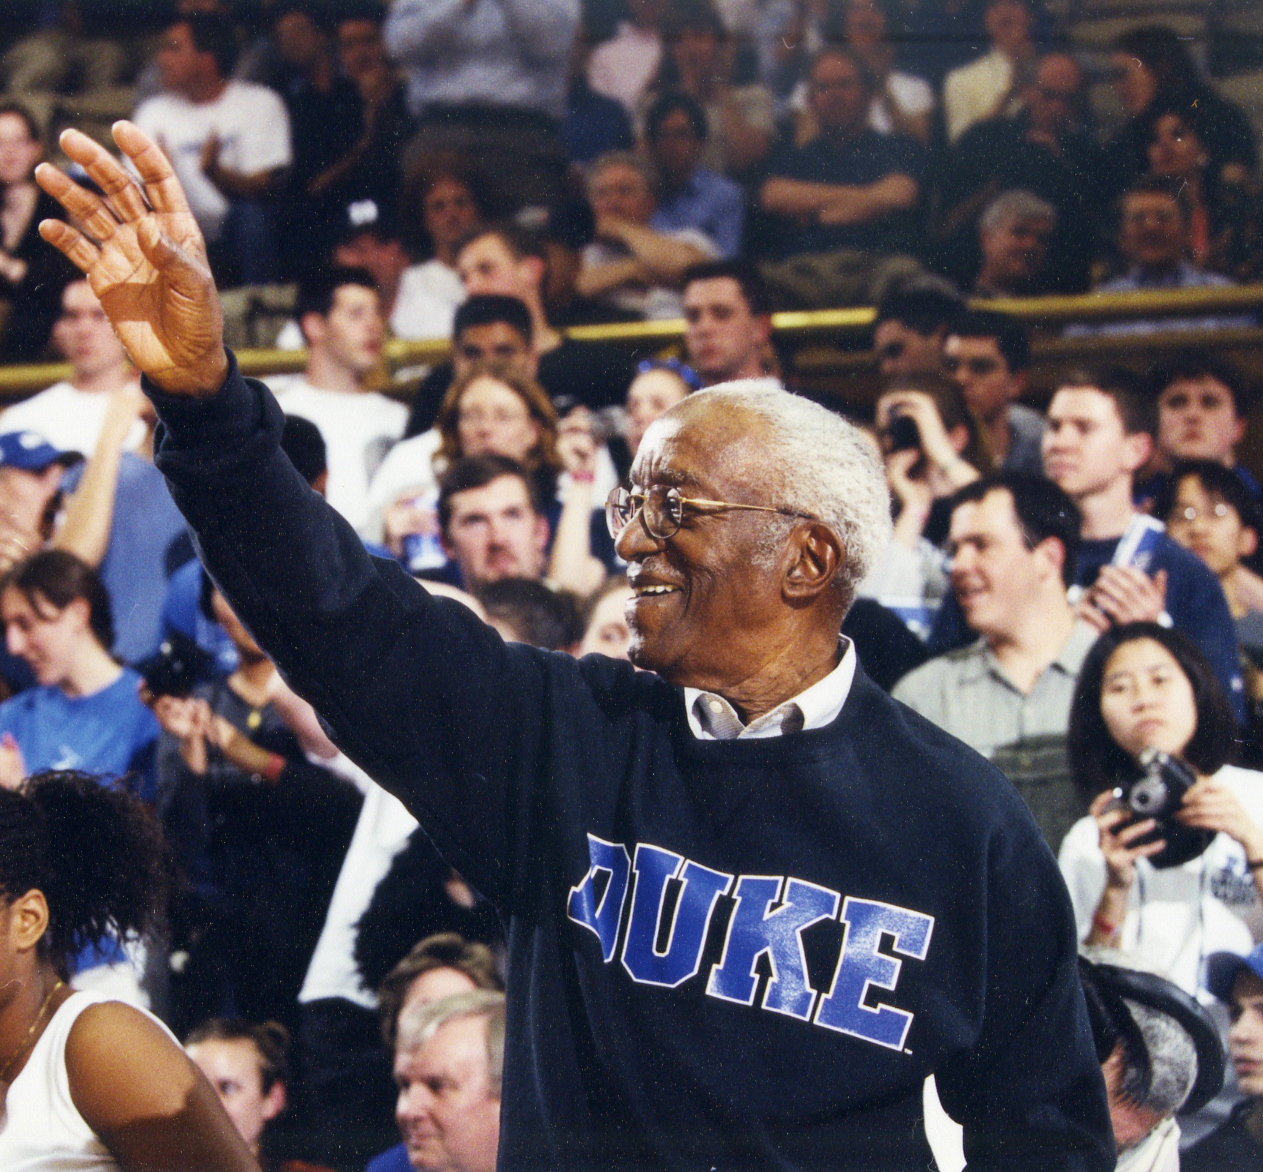 John Hope Franklin attends Duke University basketball game at Cameron Indoor Stadium, 2000